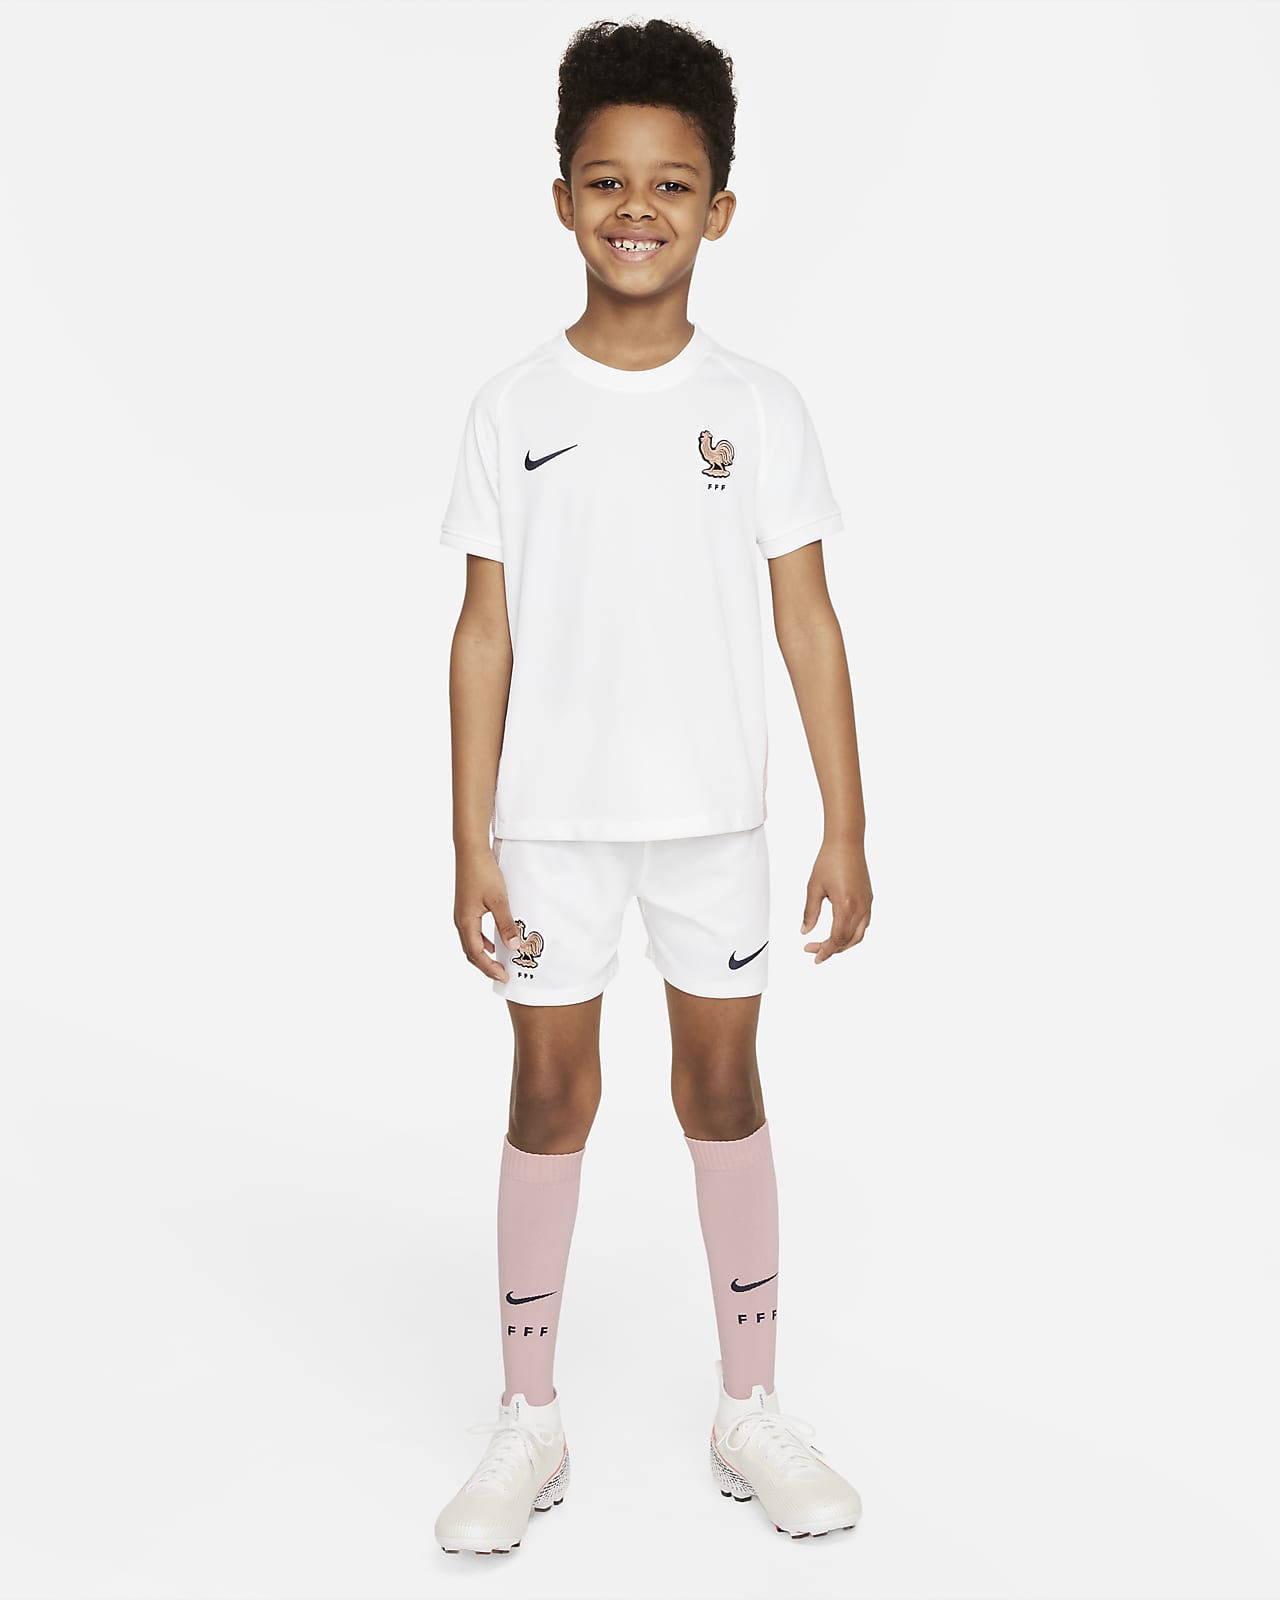 FFF 2022 Away Nike Fußballtrikot-Set für jüngere Kinder